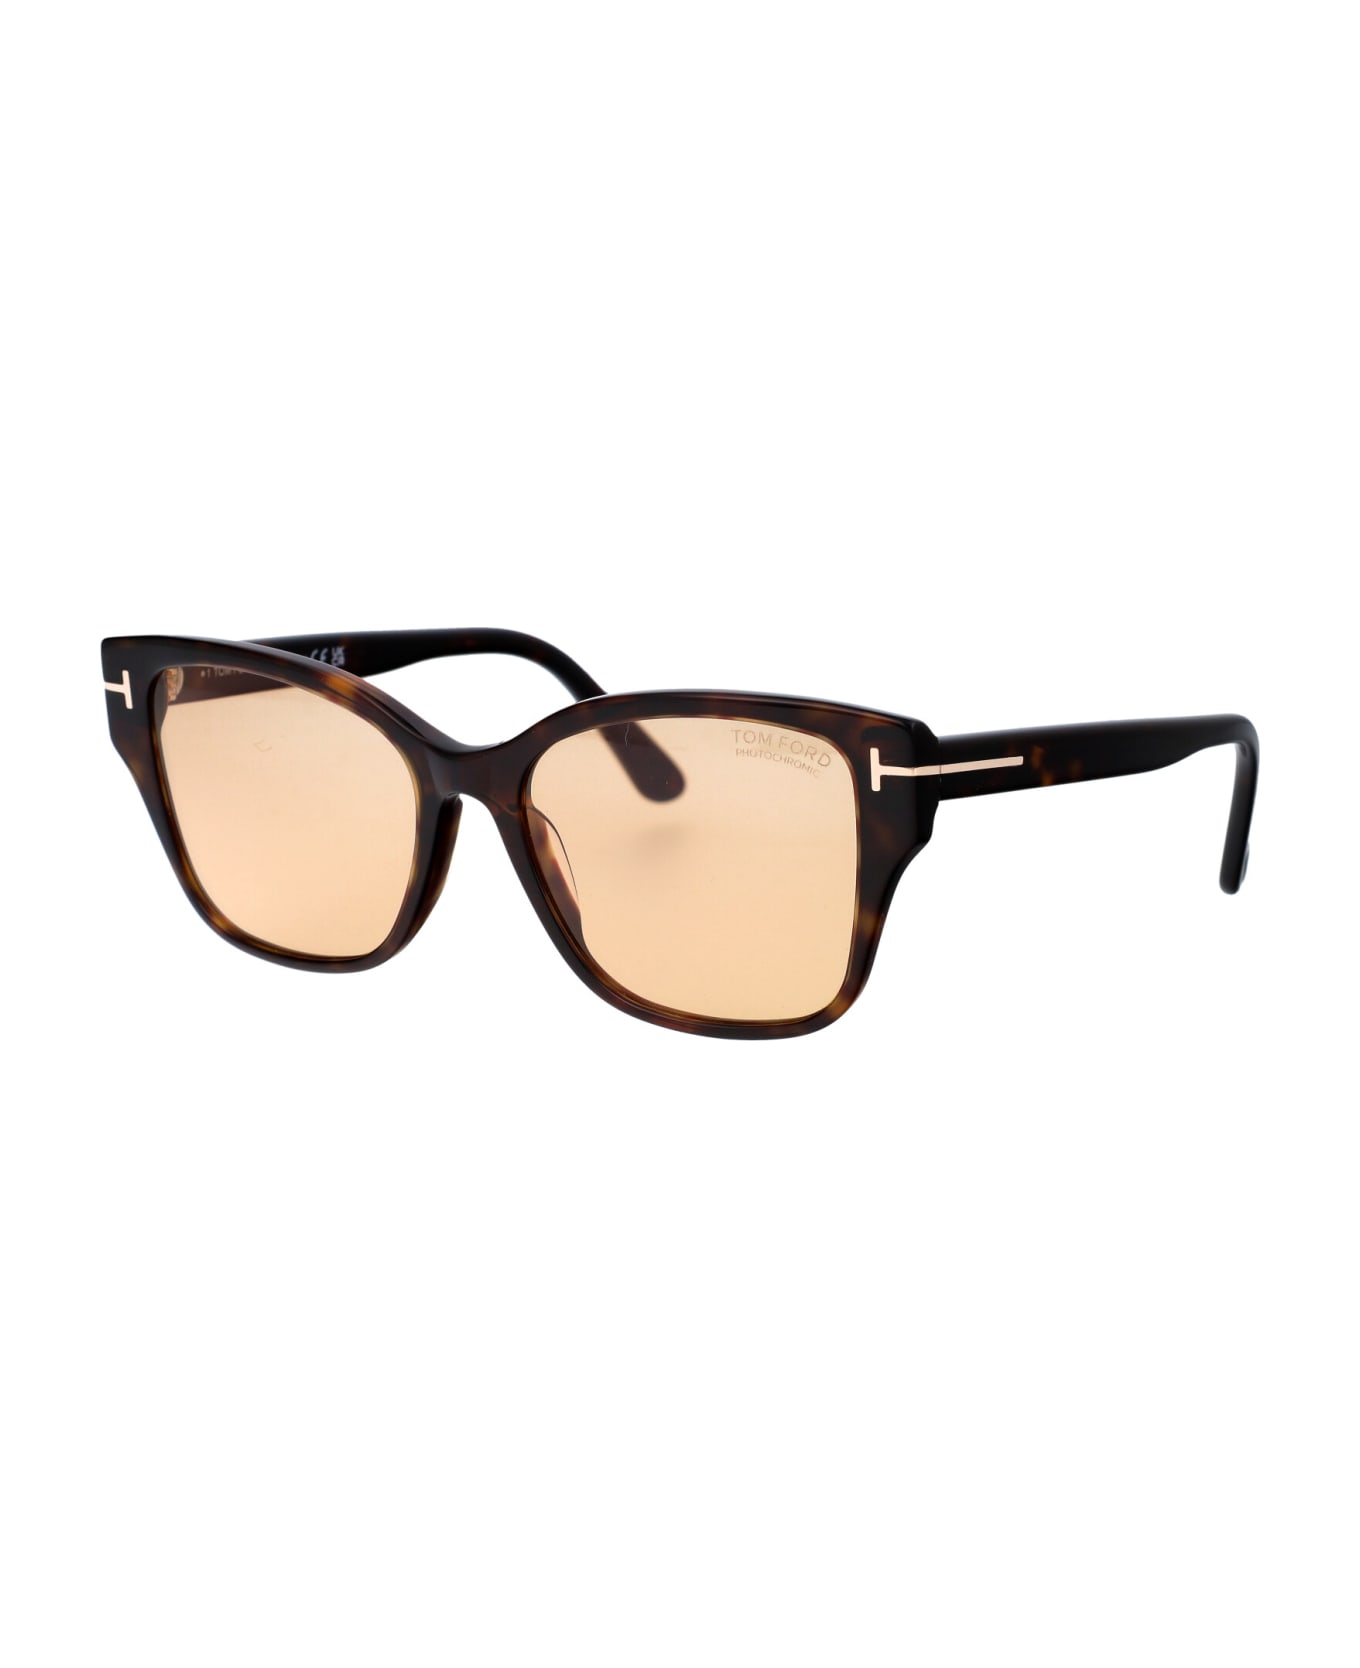 Tom Ford Eyewear Elsa Sunglasses - 52E Avana Scura  / Marrone